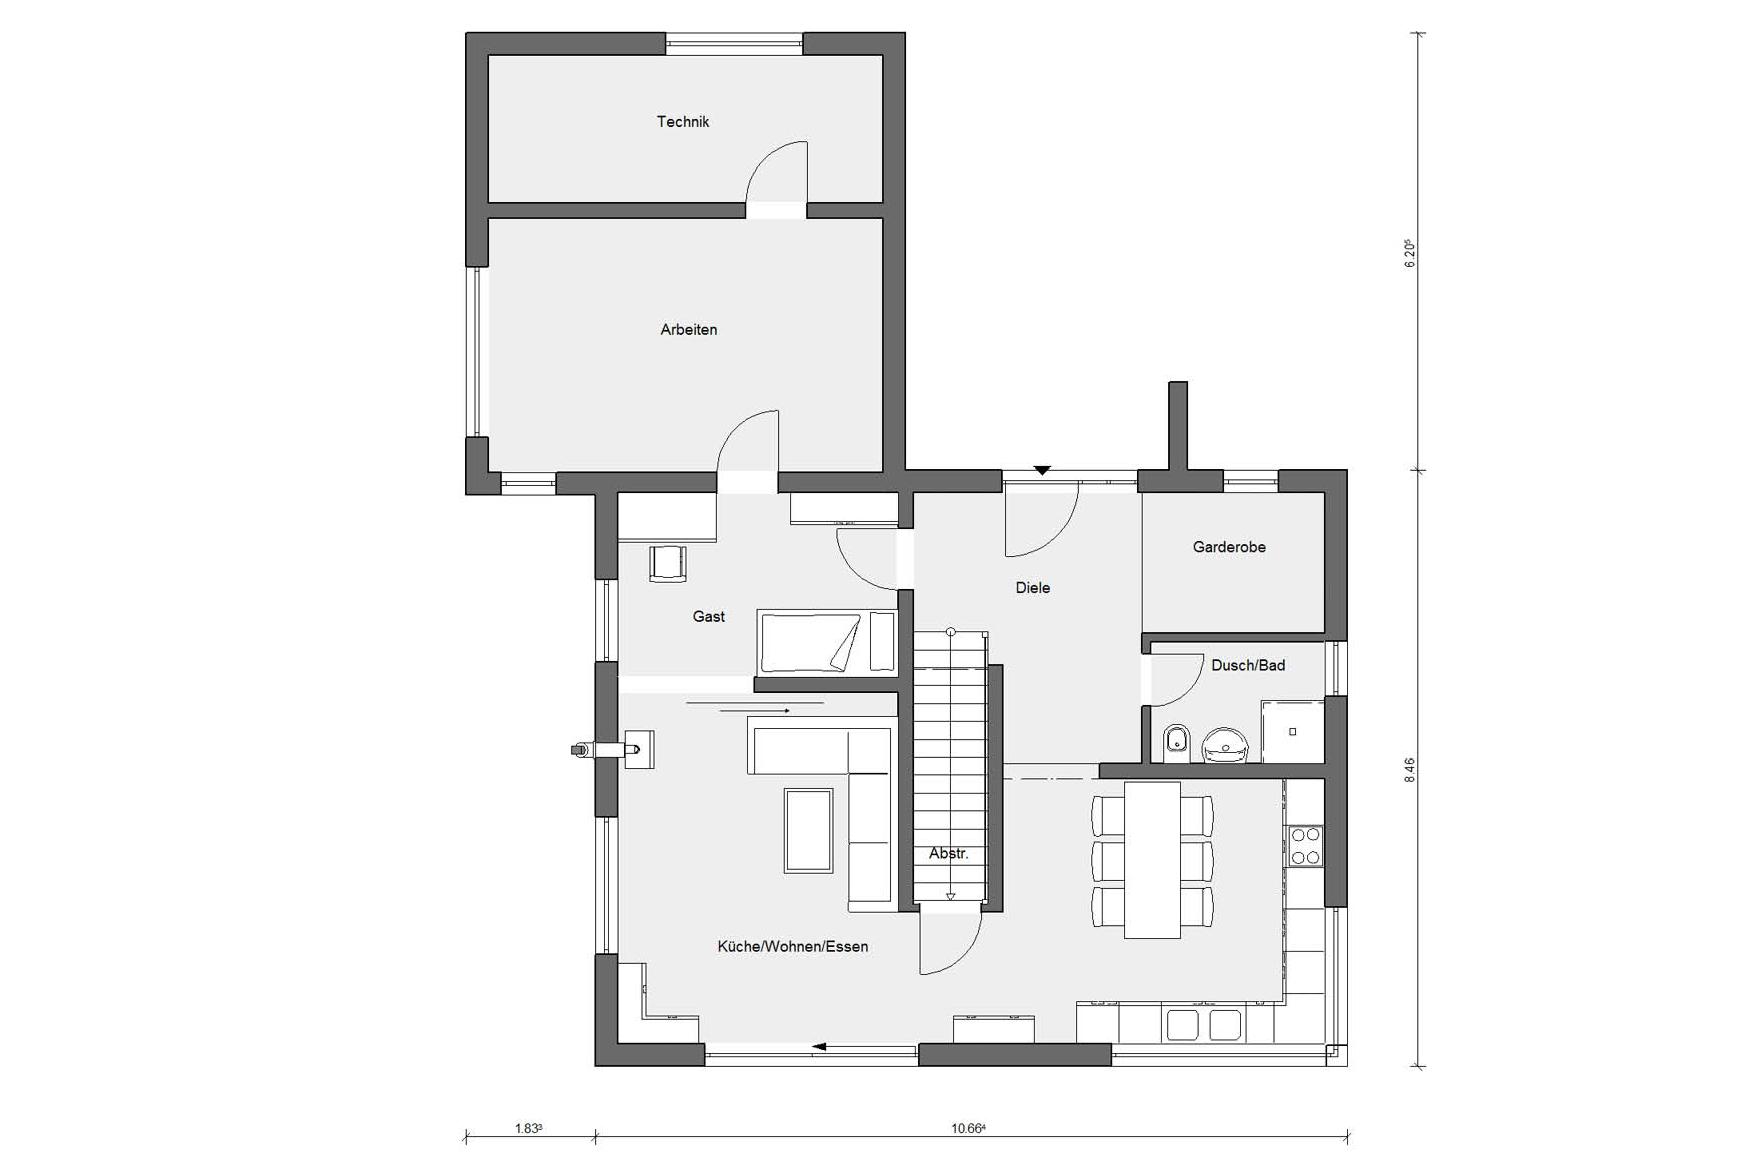 Floor plan E 15-179.1 The energy house for families